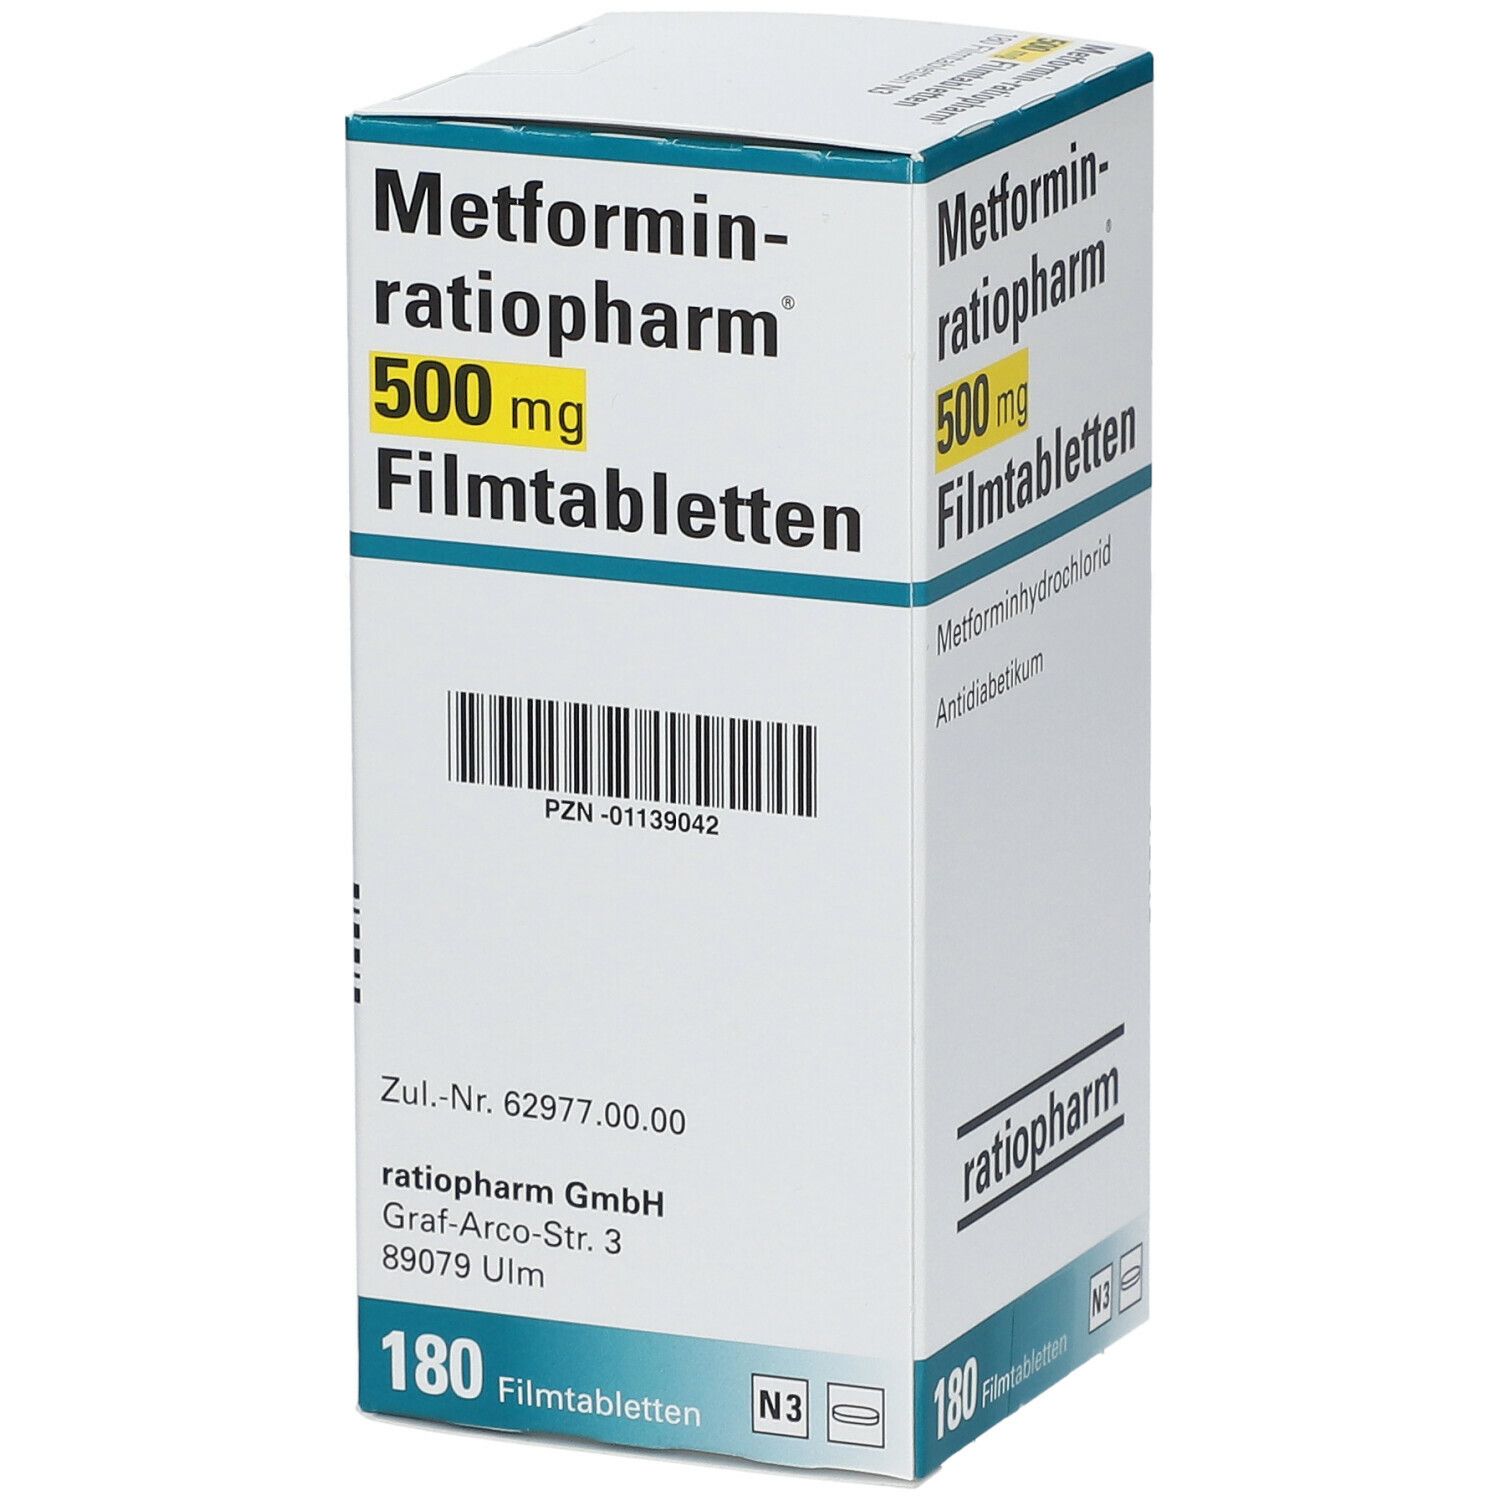 Metformin-ratiopharm® 500 mg